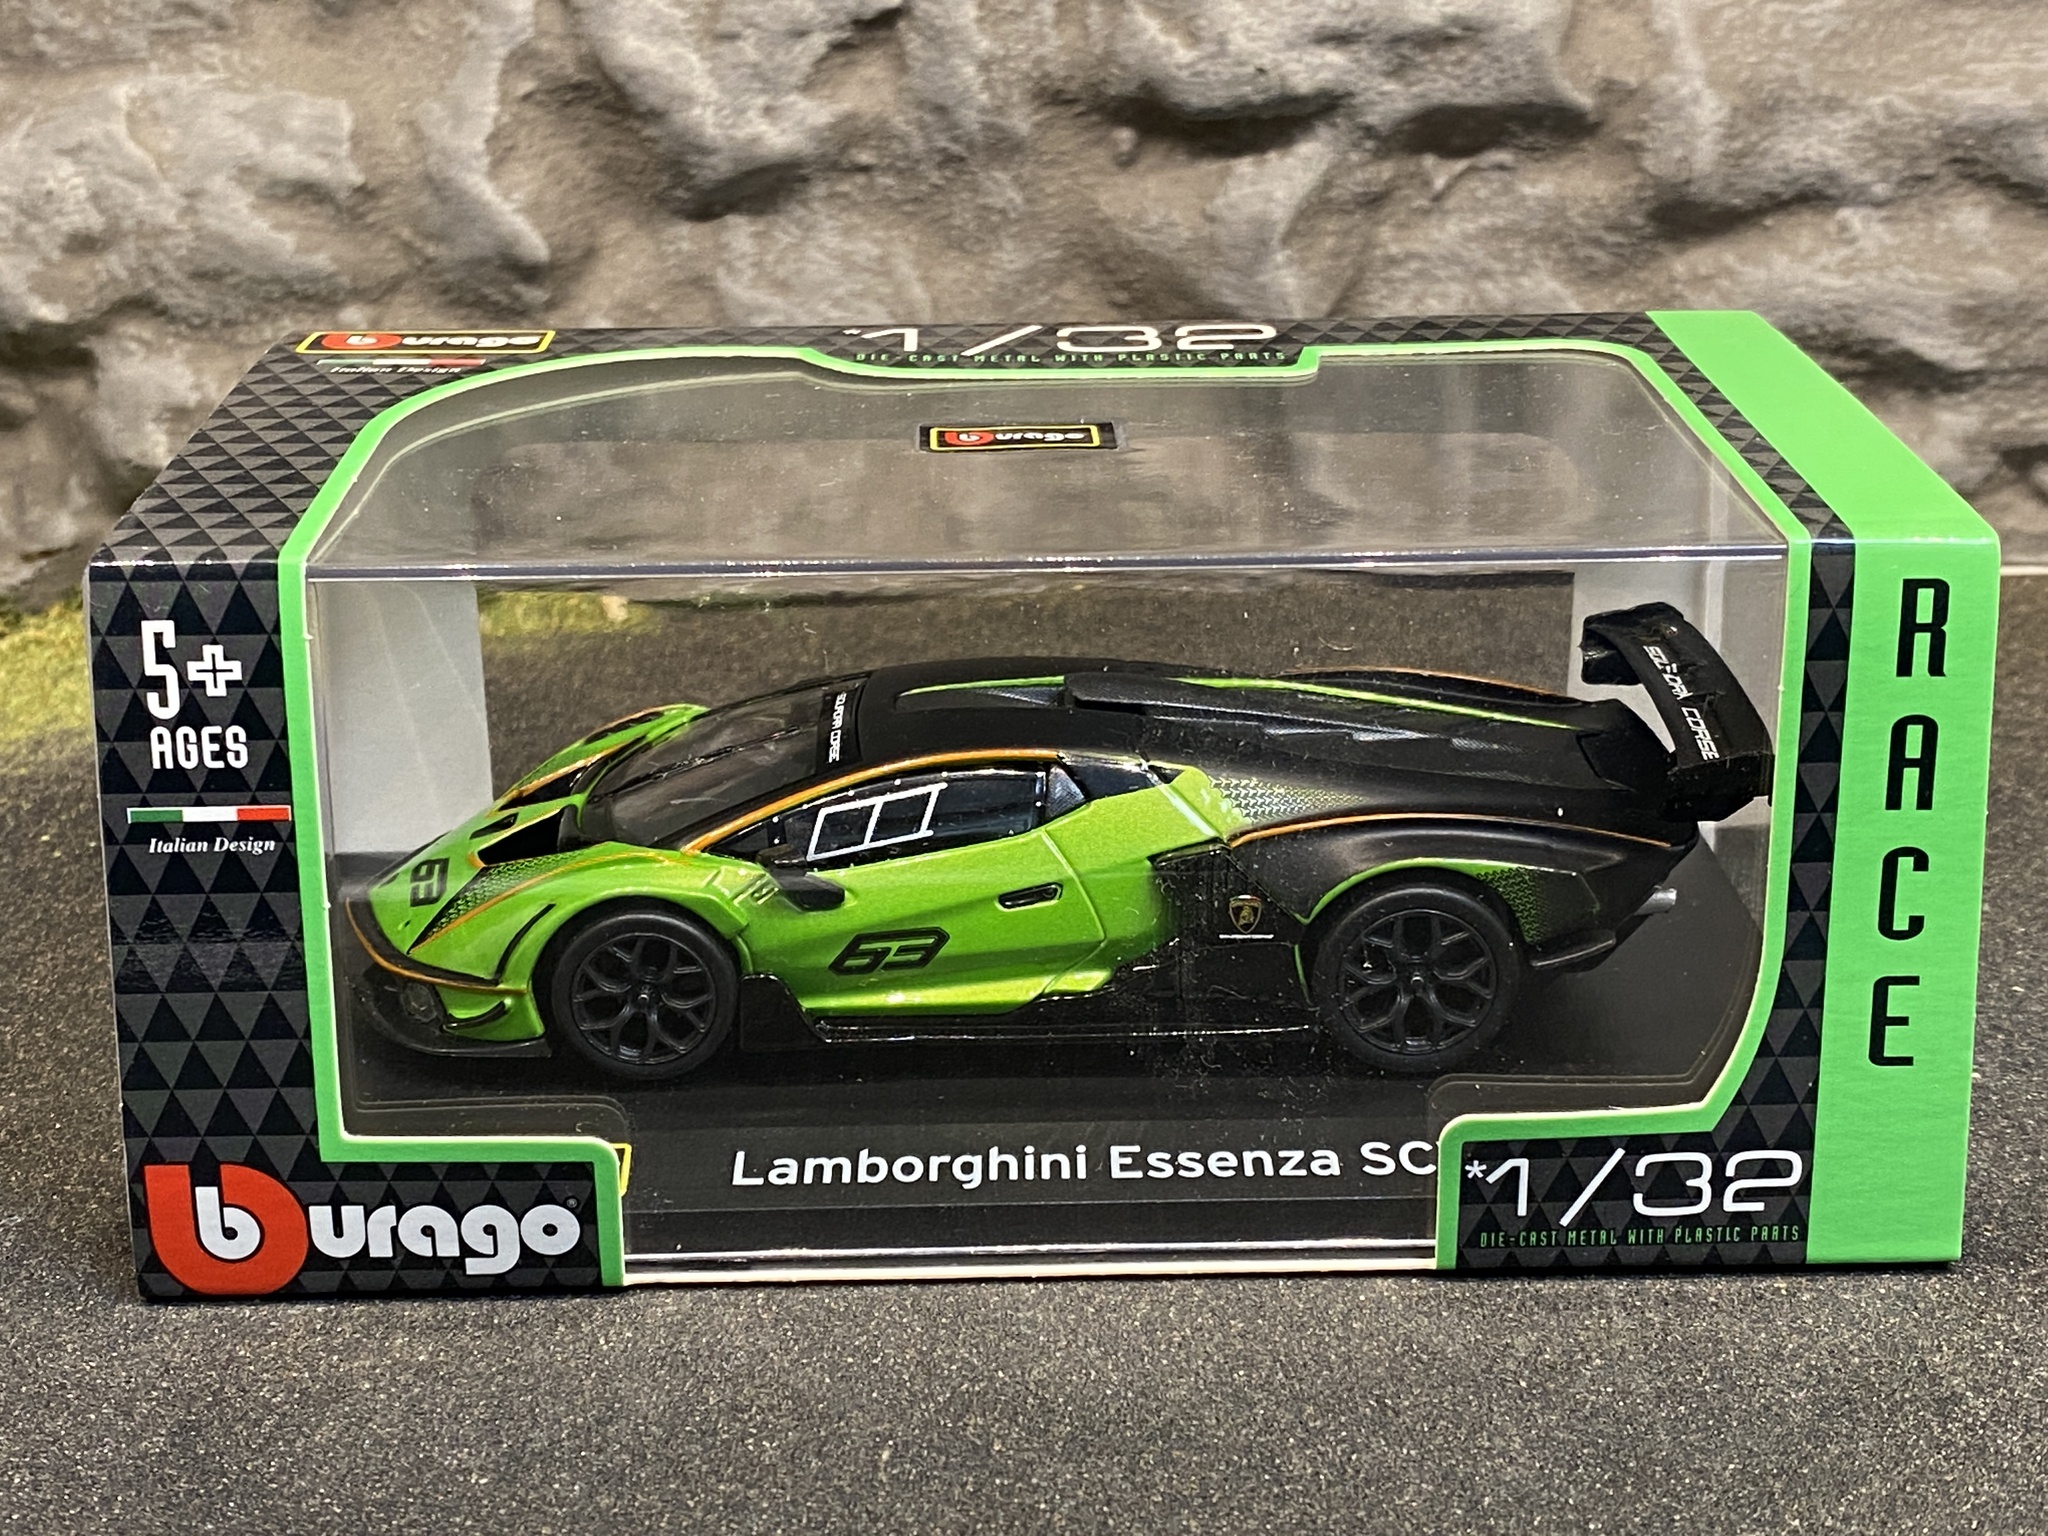 Skala 1/32 - Riktigt läcker Lamborghini Essenza SCV12 från Bburago